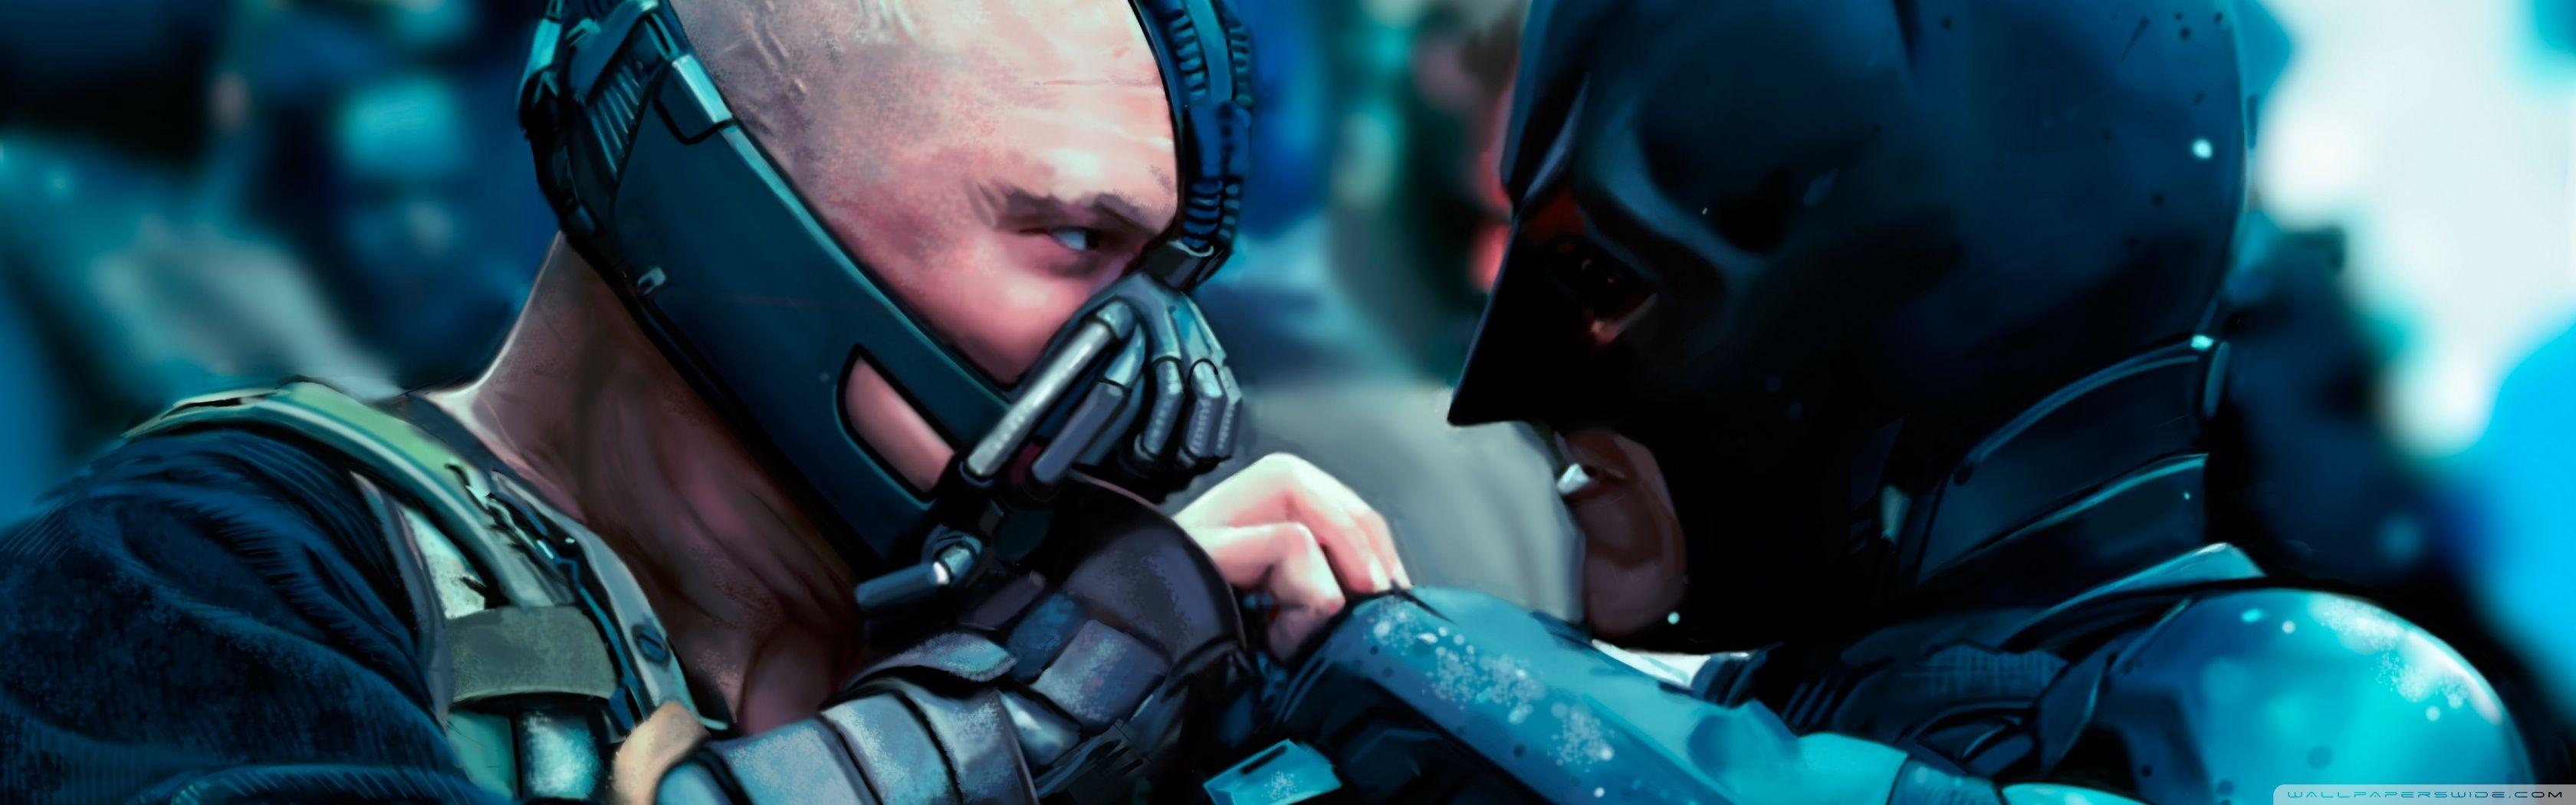 Batman vs Bane ❤ 4K HD Desktop Wallpaper for 4K Ultra HD TV • Dual